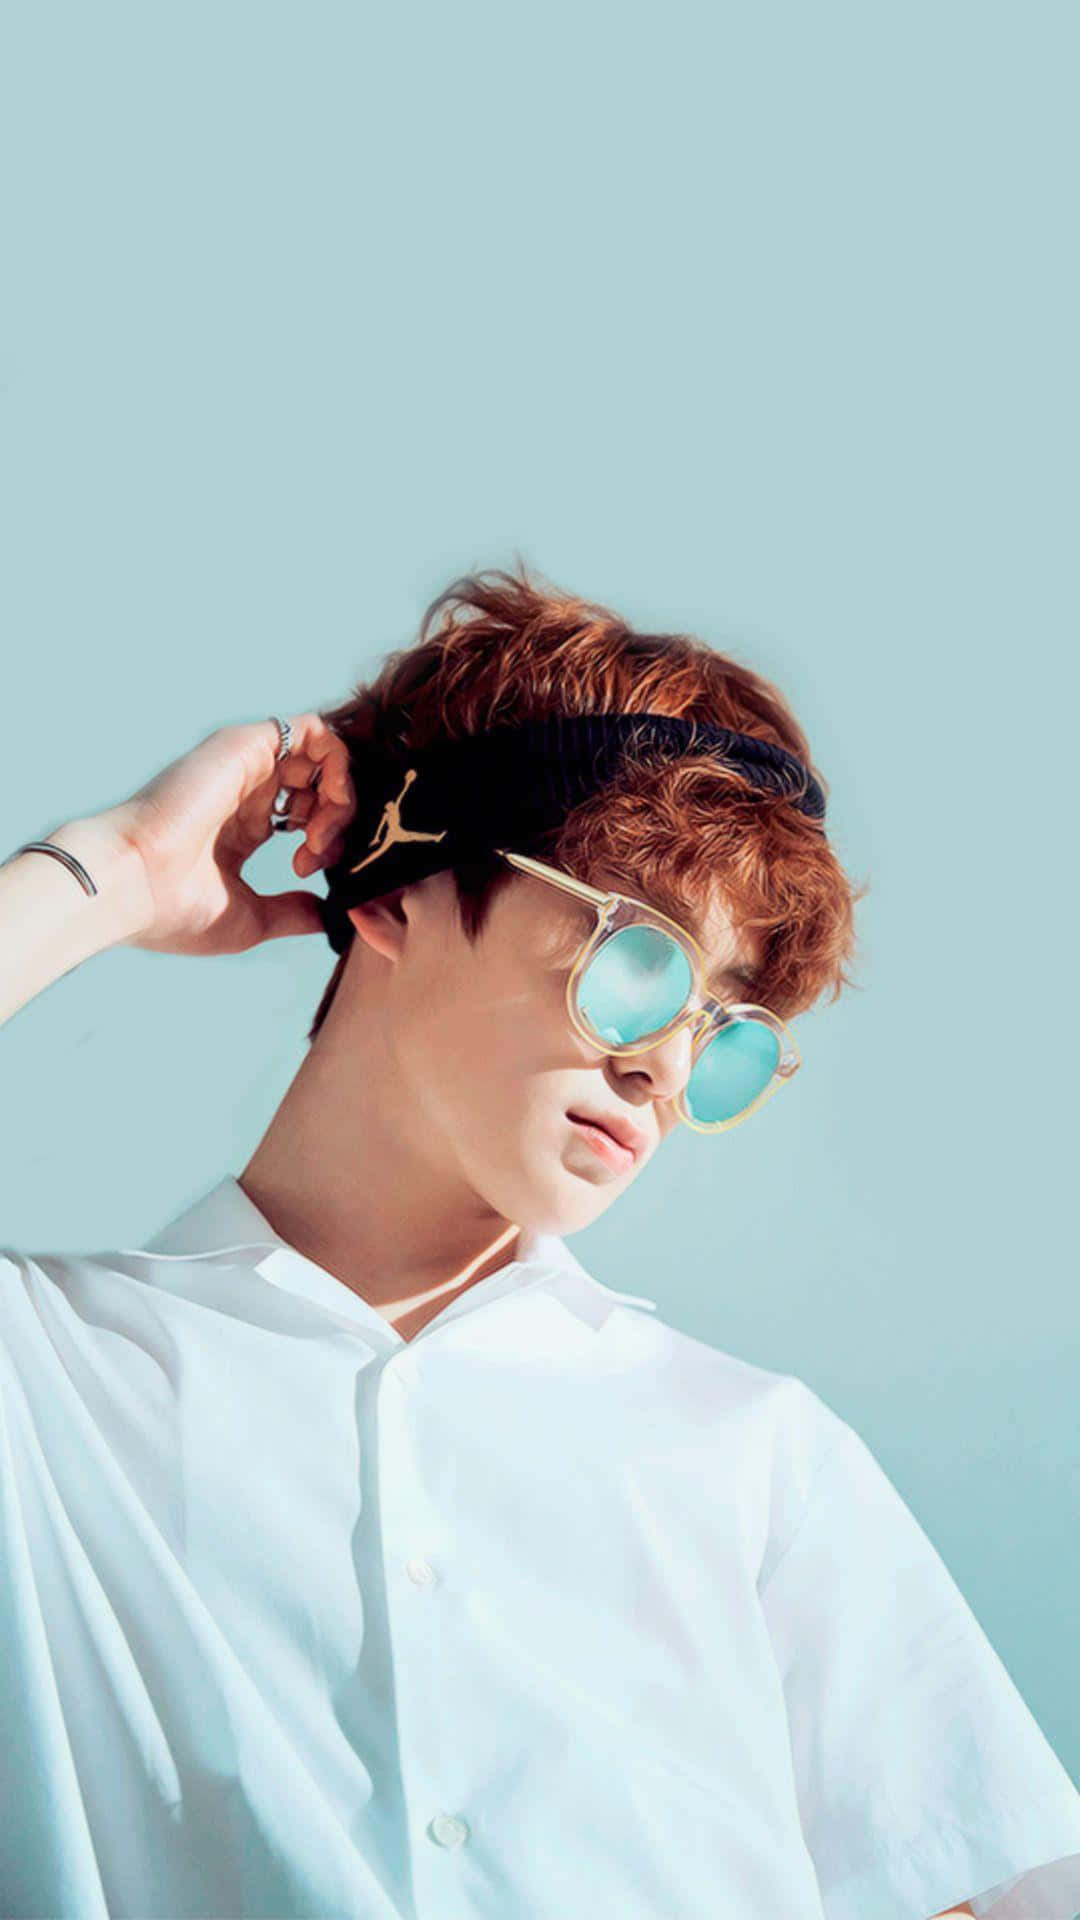 Nct Jaehyun In Sunglasses Fashion Portrait Background